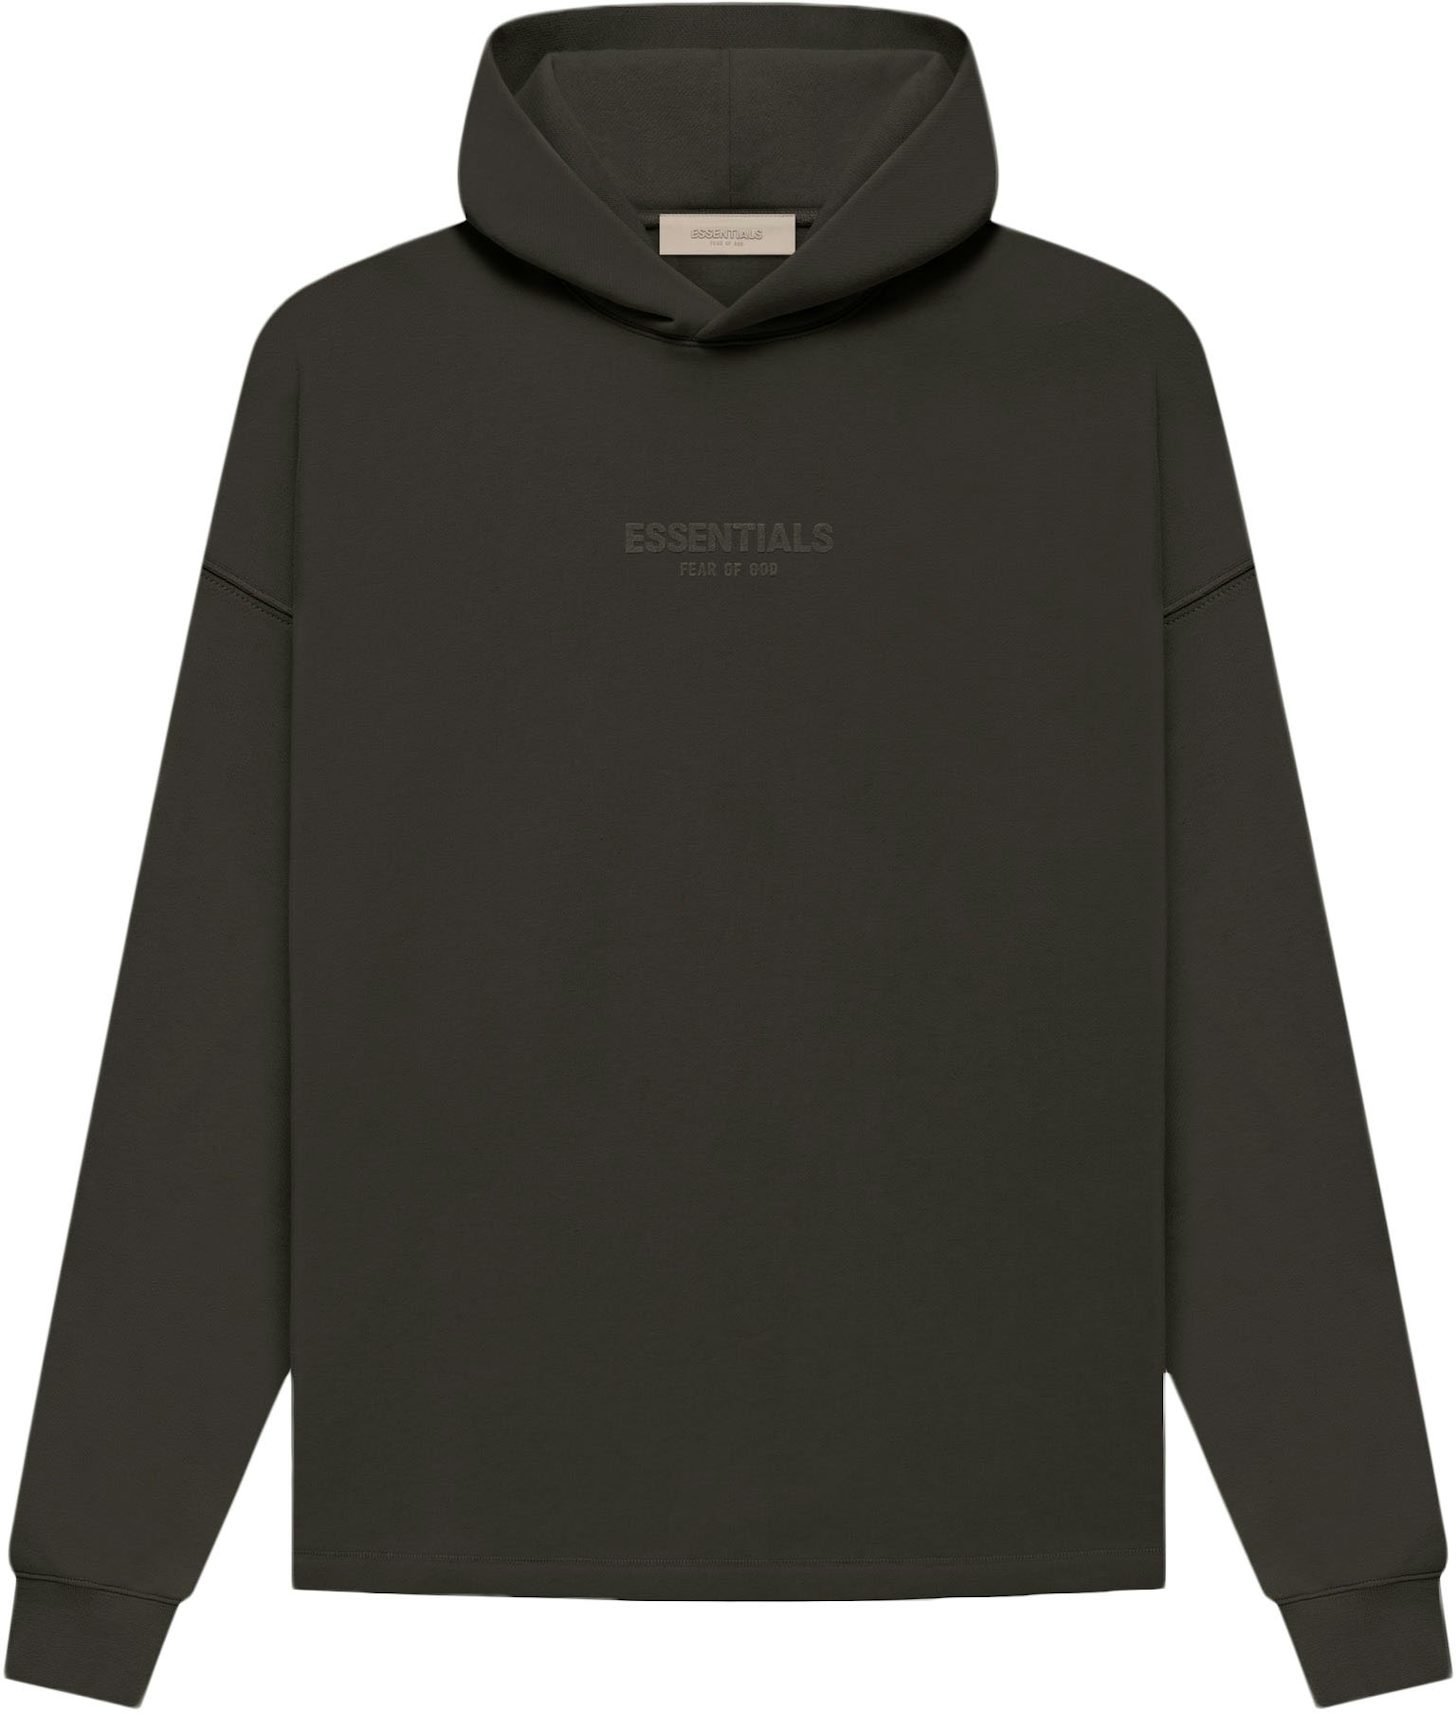 LV, Louis Vuitton Supreme Black White 3D Hoodie, Shirt - LIMITED